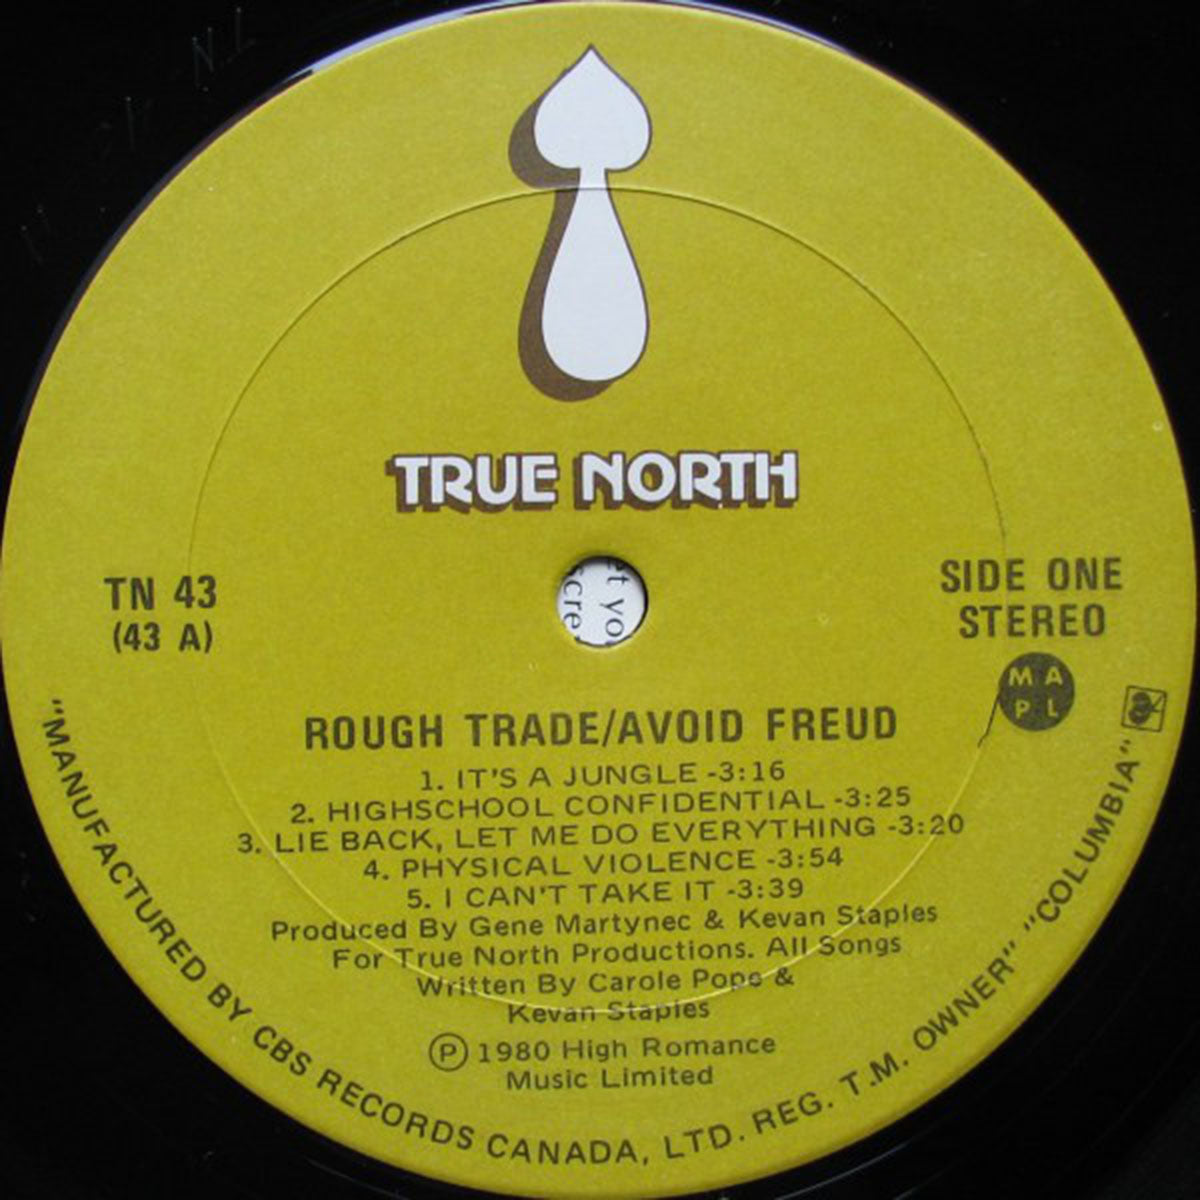 Rough Trade ‎– Avoid Freud - 1980